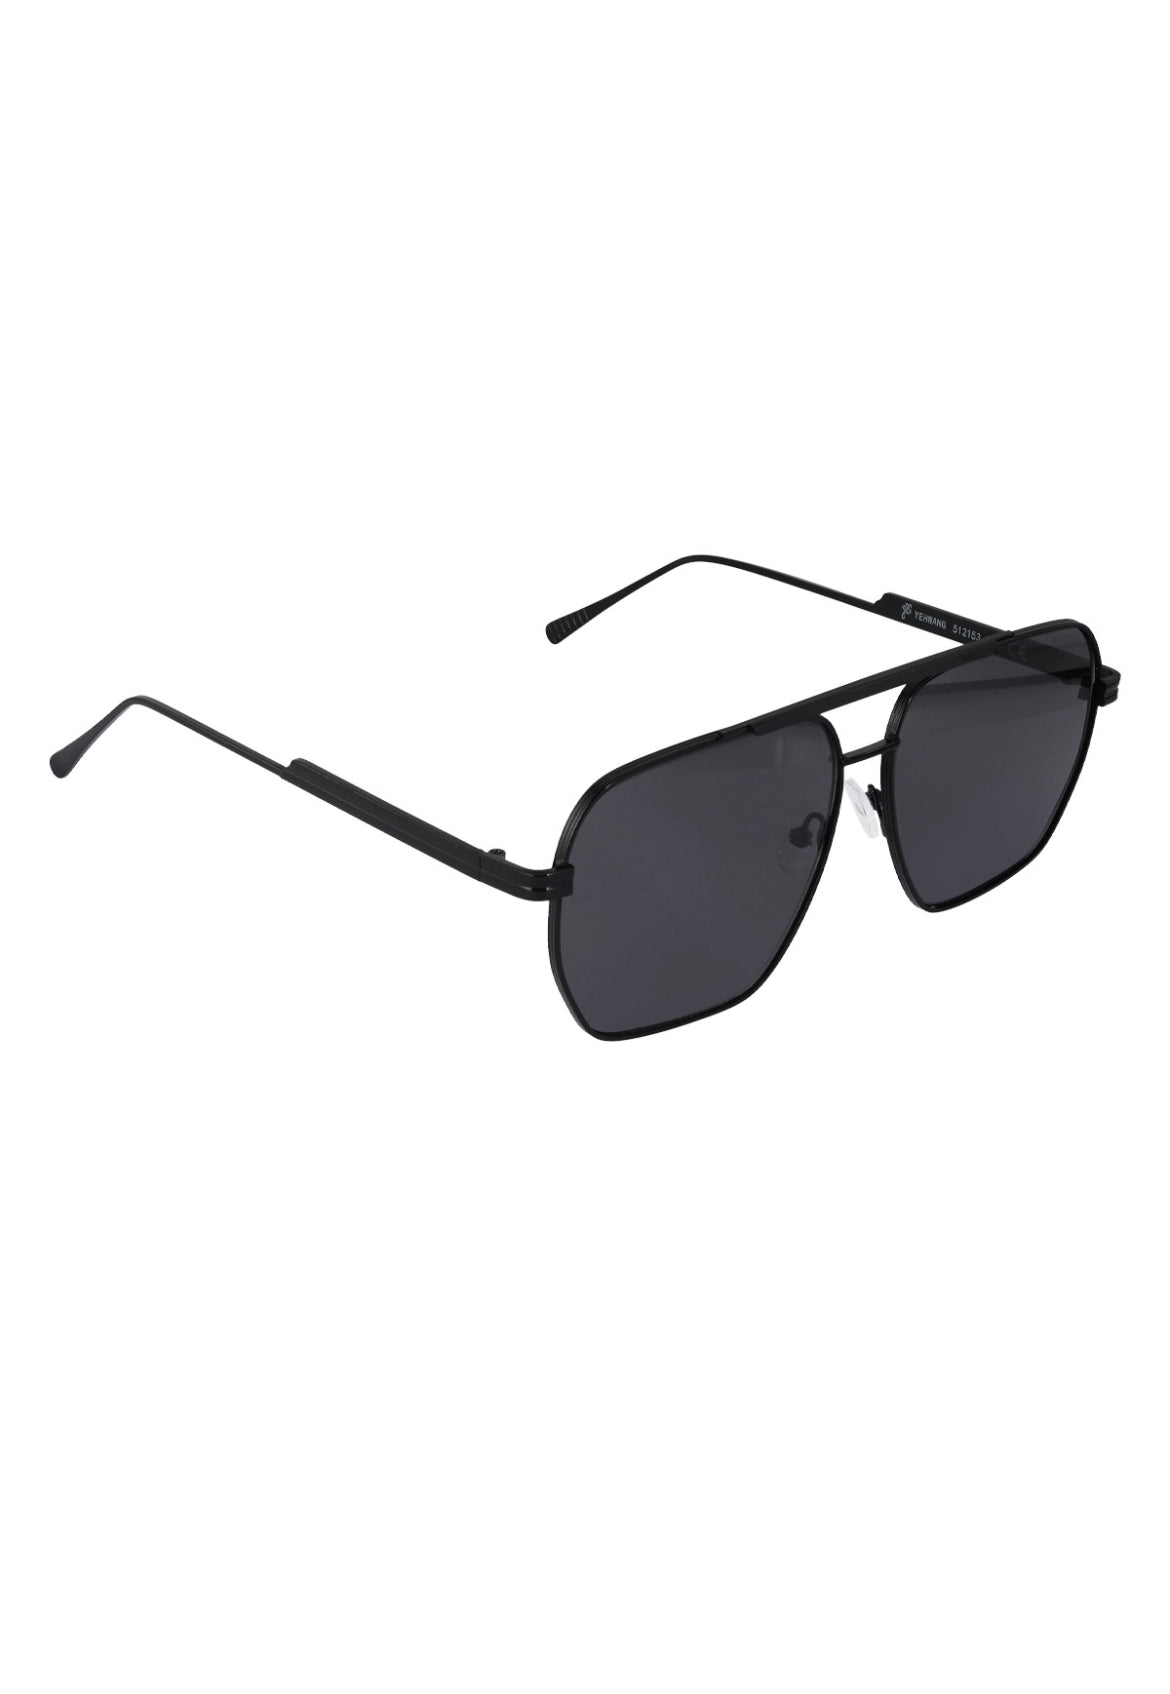 Metal summer sunglasses black -